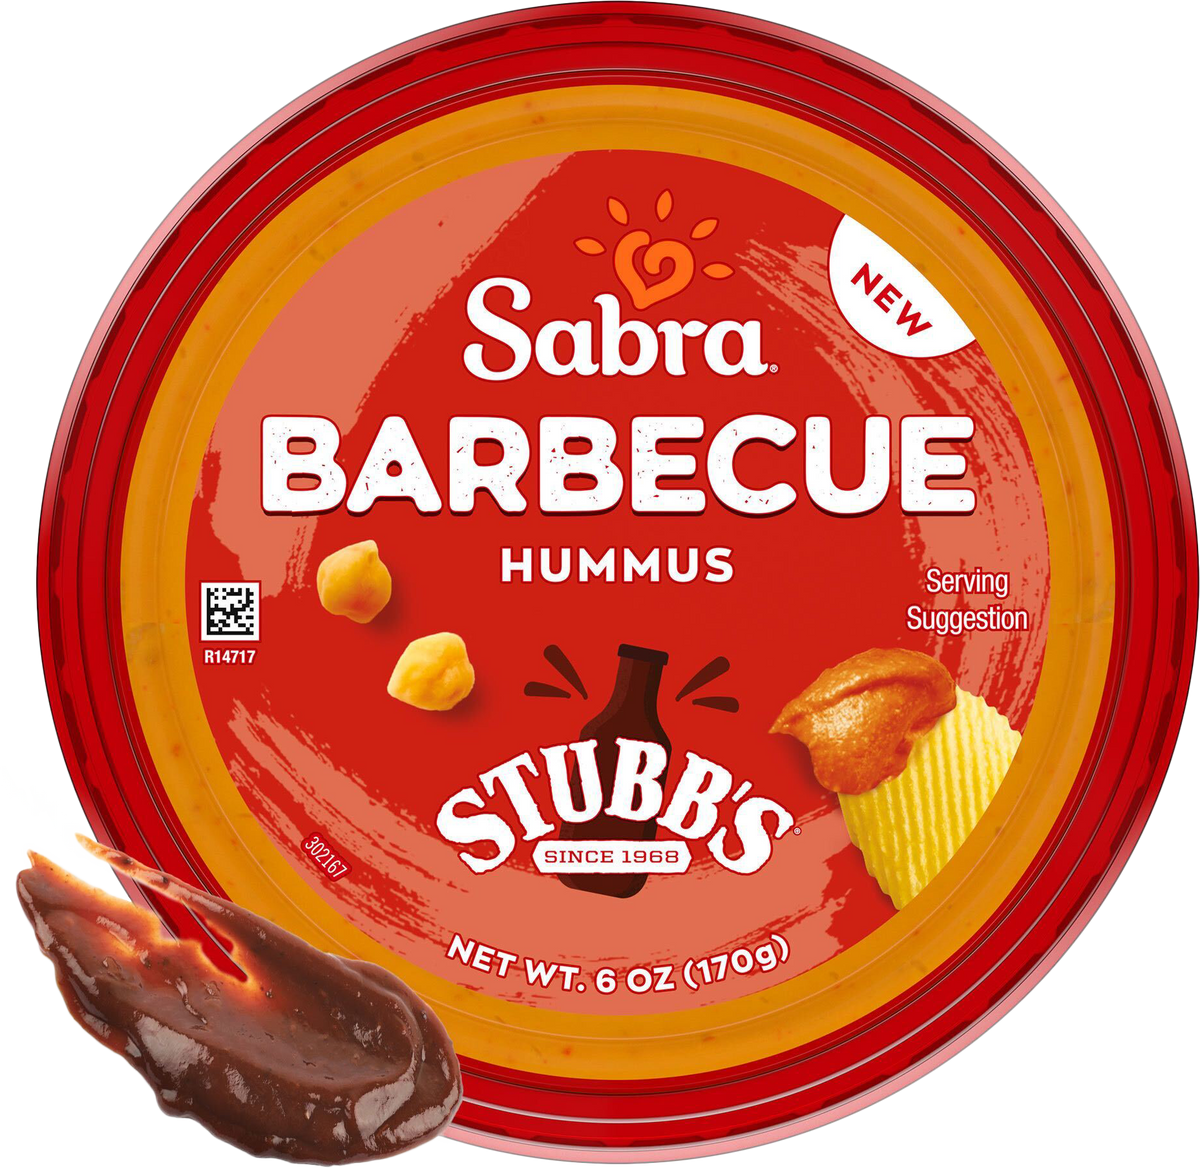 Houmous barbecue Sabra - 6oz